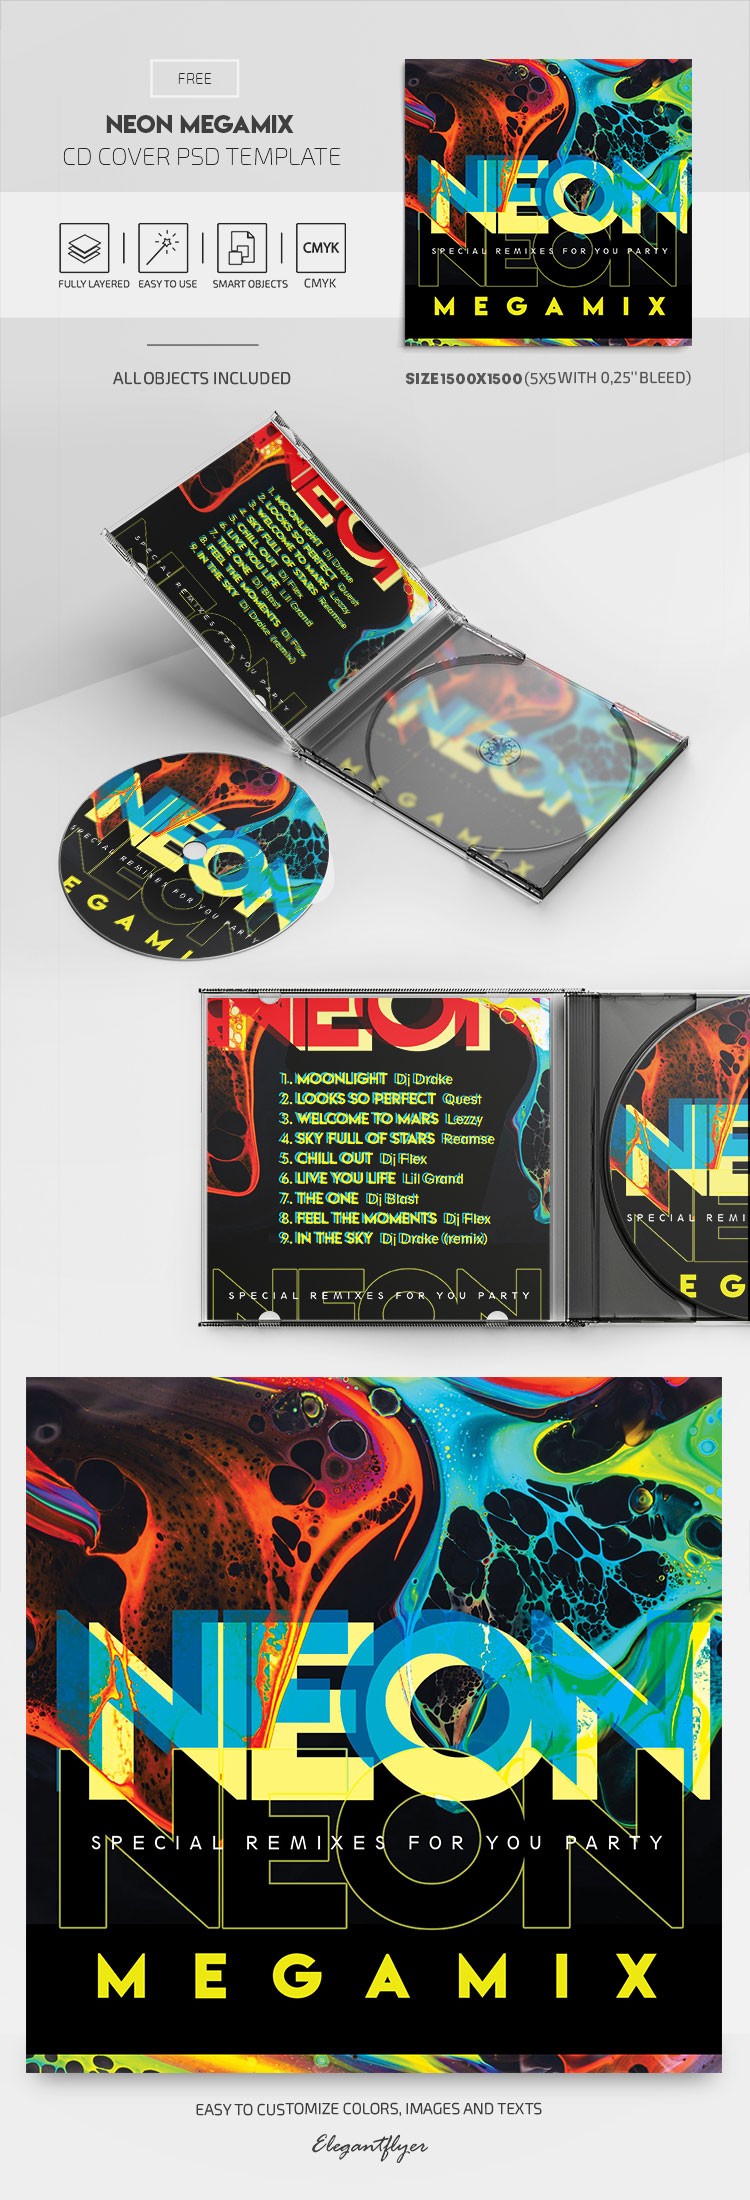 Portada del CD Neon Megamix by ElegantFlyer